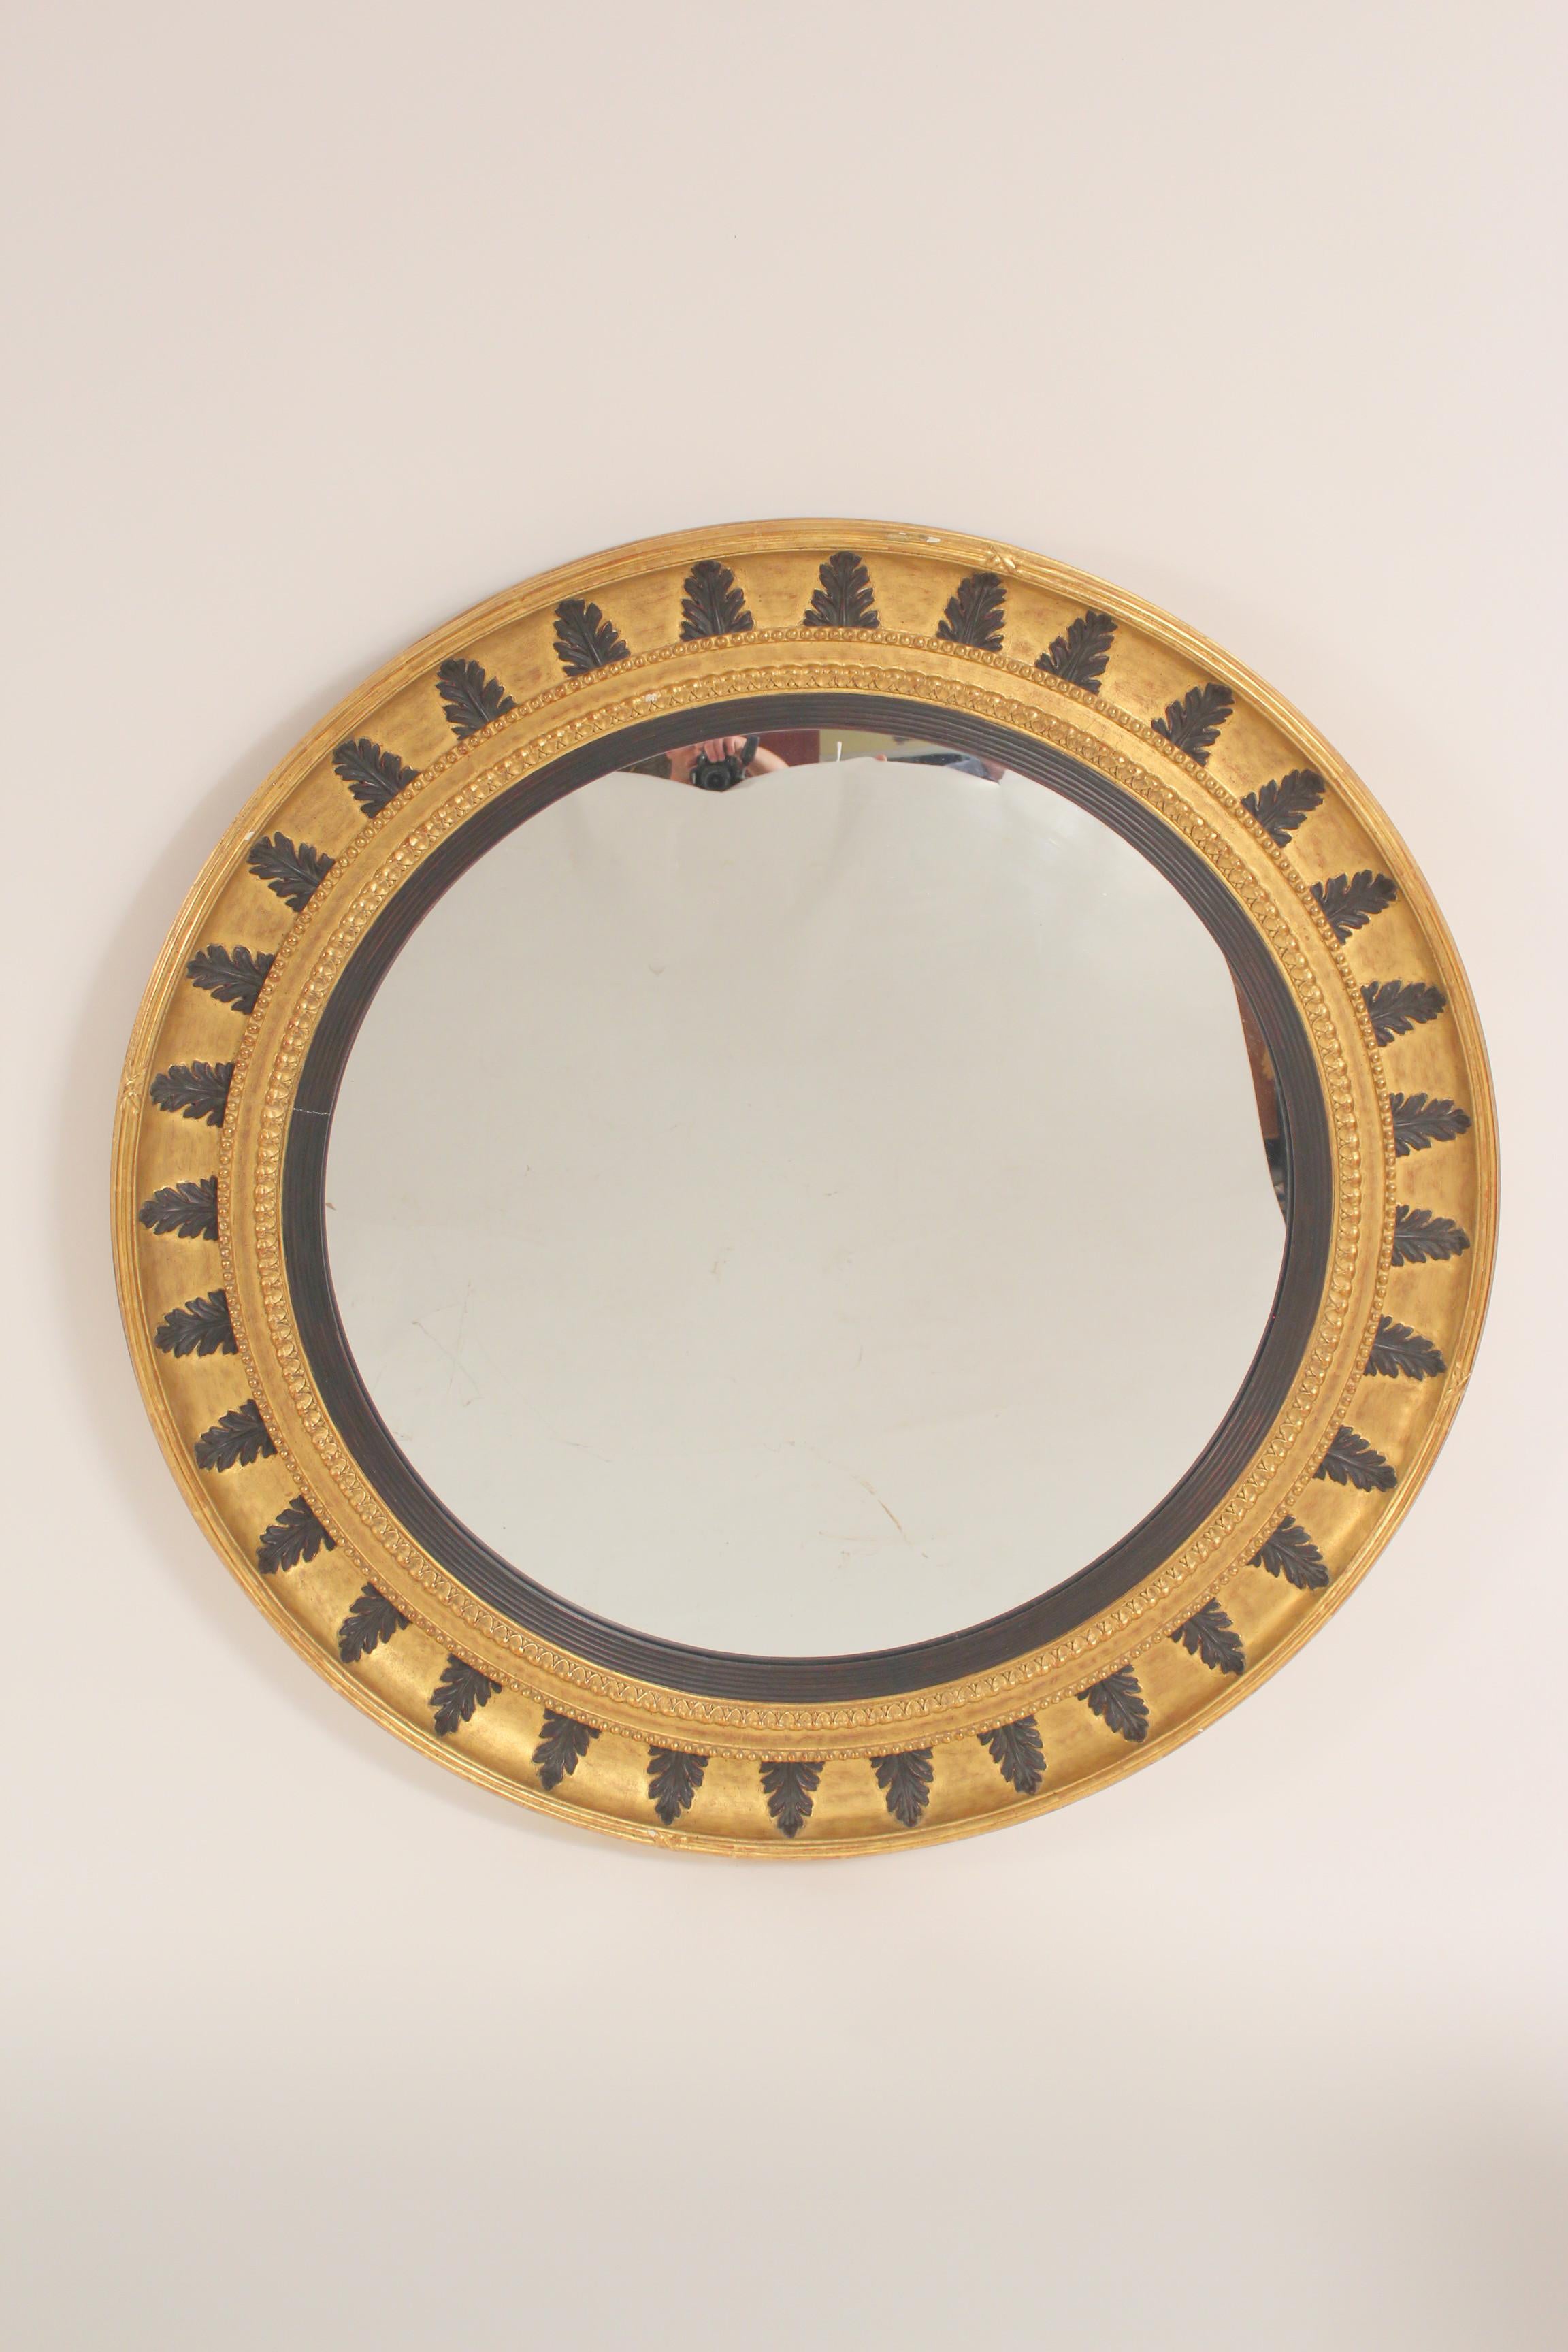 Pair of neo classical style gilt wood bulls eye mirrors, circa late 20th century.